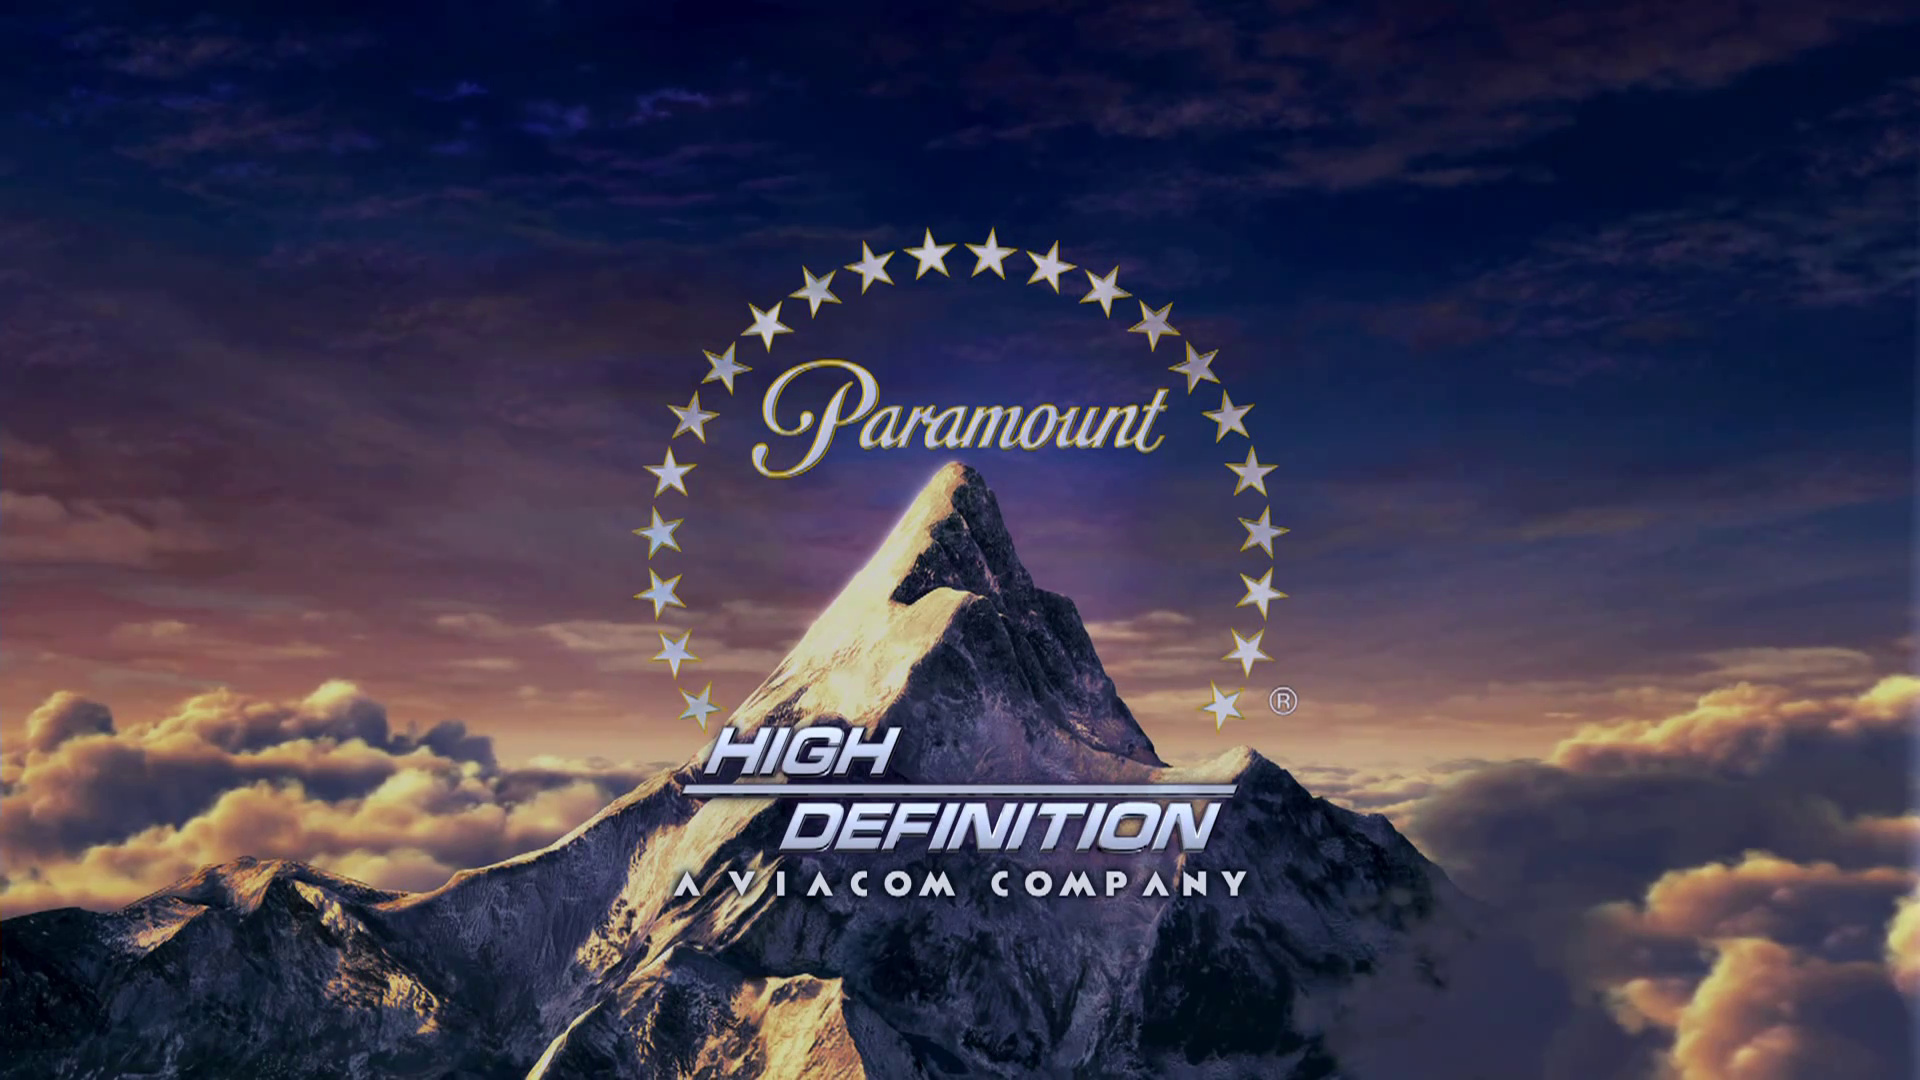 Paramount, High Definition logo, Brand identity, Recognition, 1920x1080 Full HD Desktop